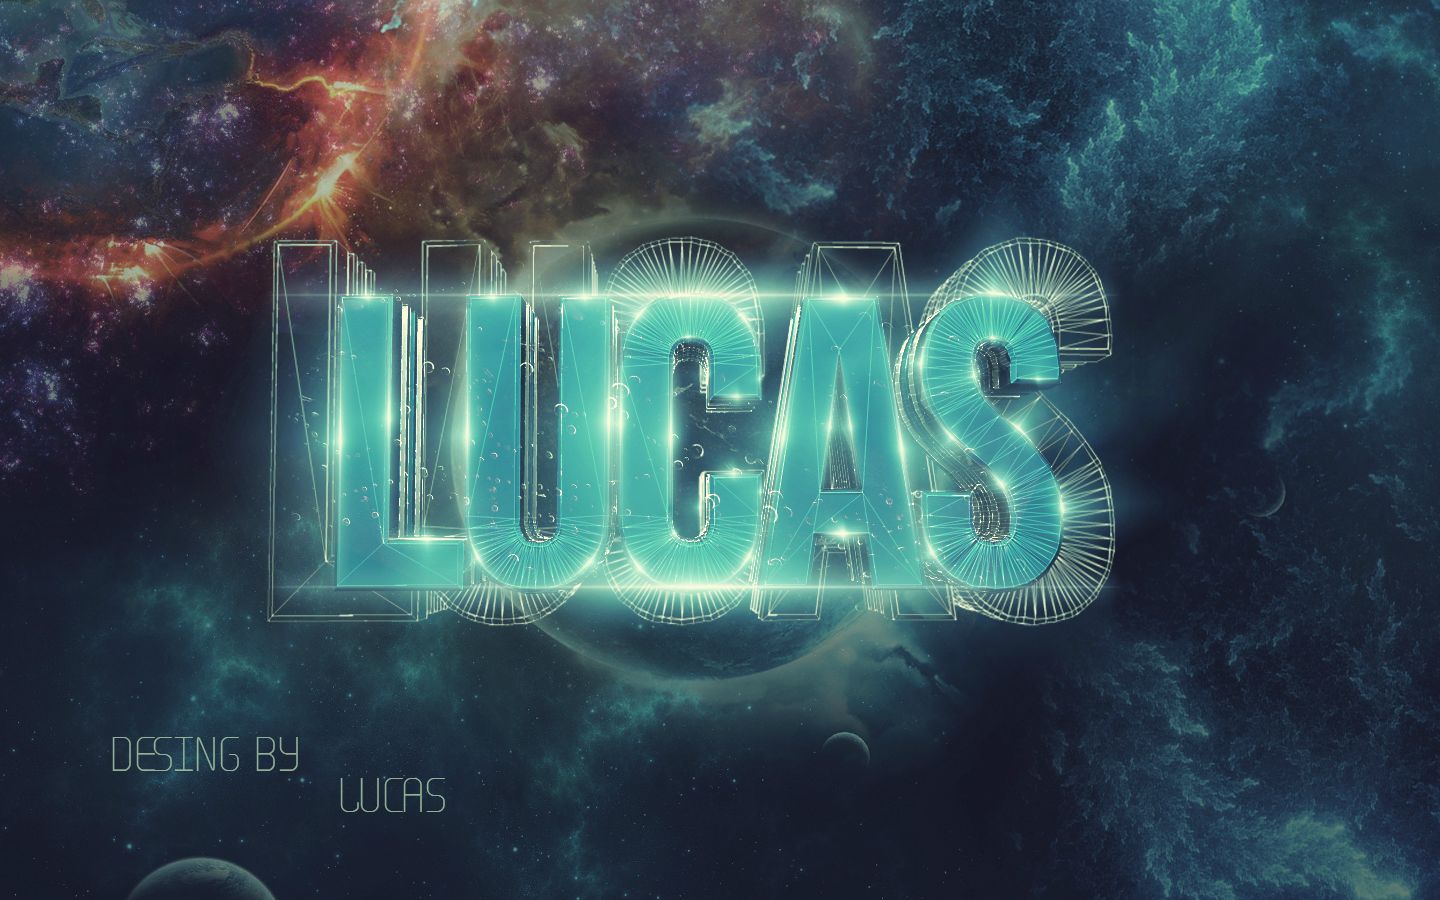 Best Lucas Background Bros Wallpaper